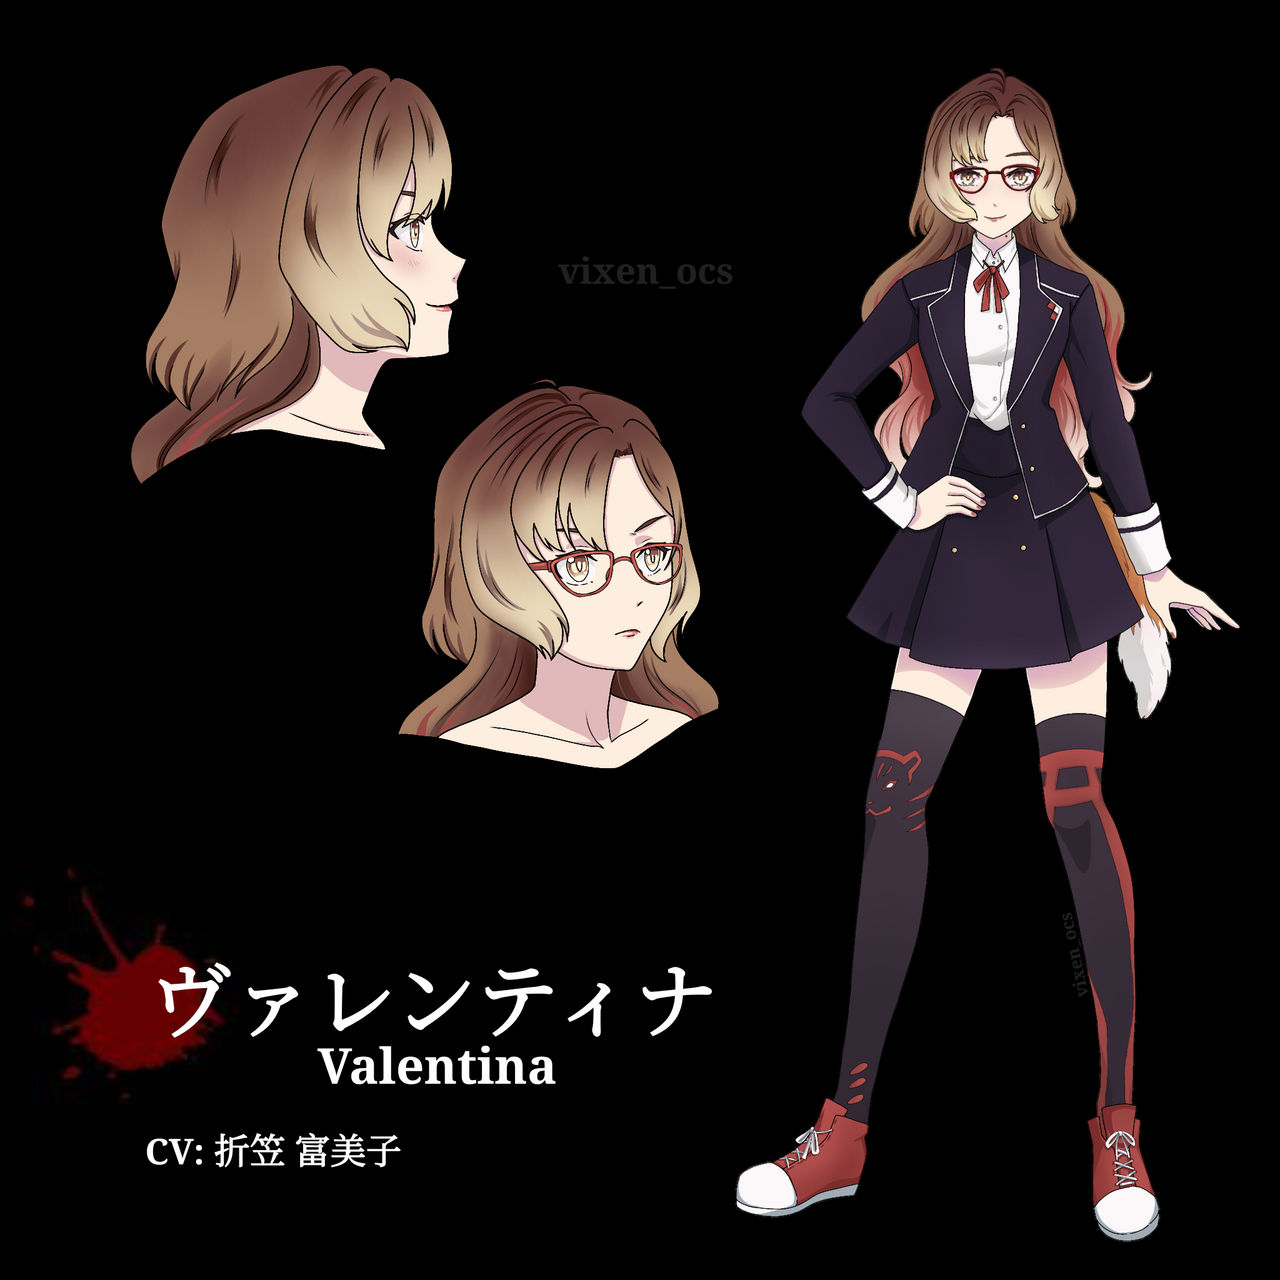 Diabolik Lovers oc- Anime Style by vale-inazuma on DeviantArt